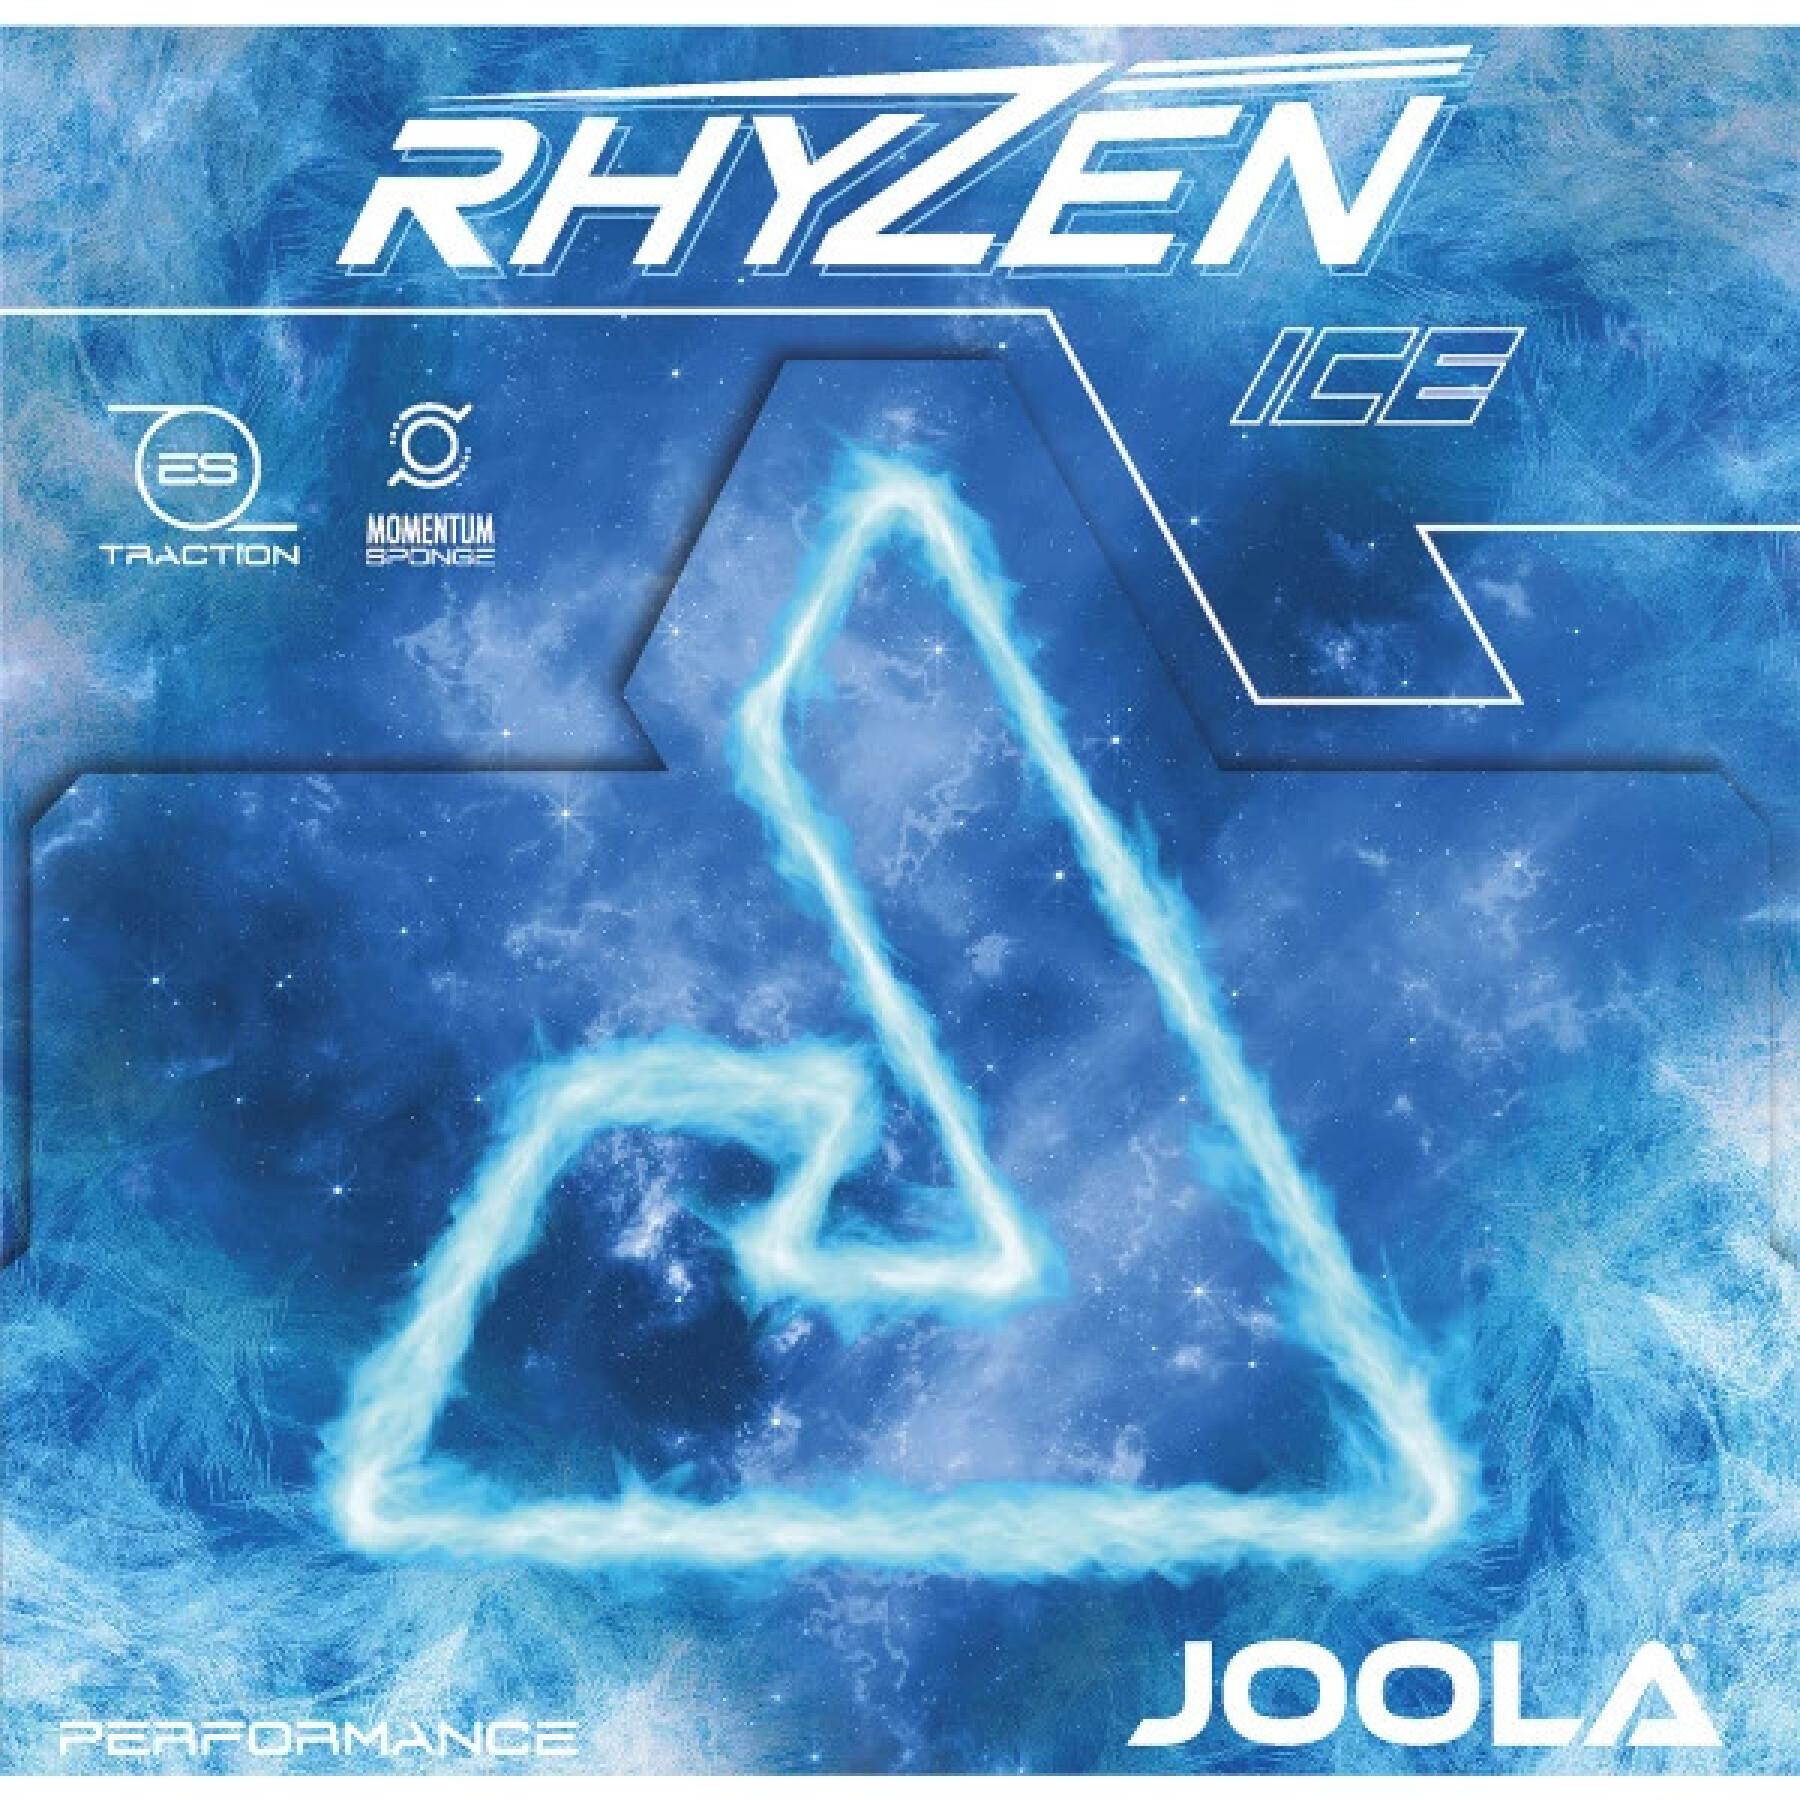 Table tennis racket cover Joola Rhyzen Ice 2,0